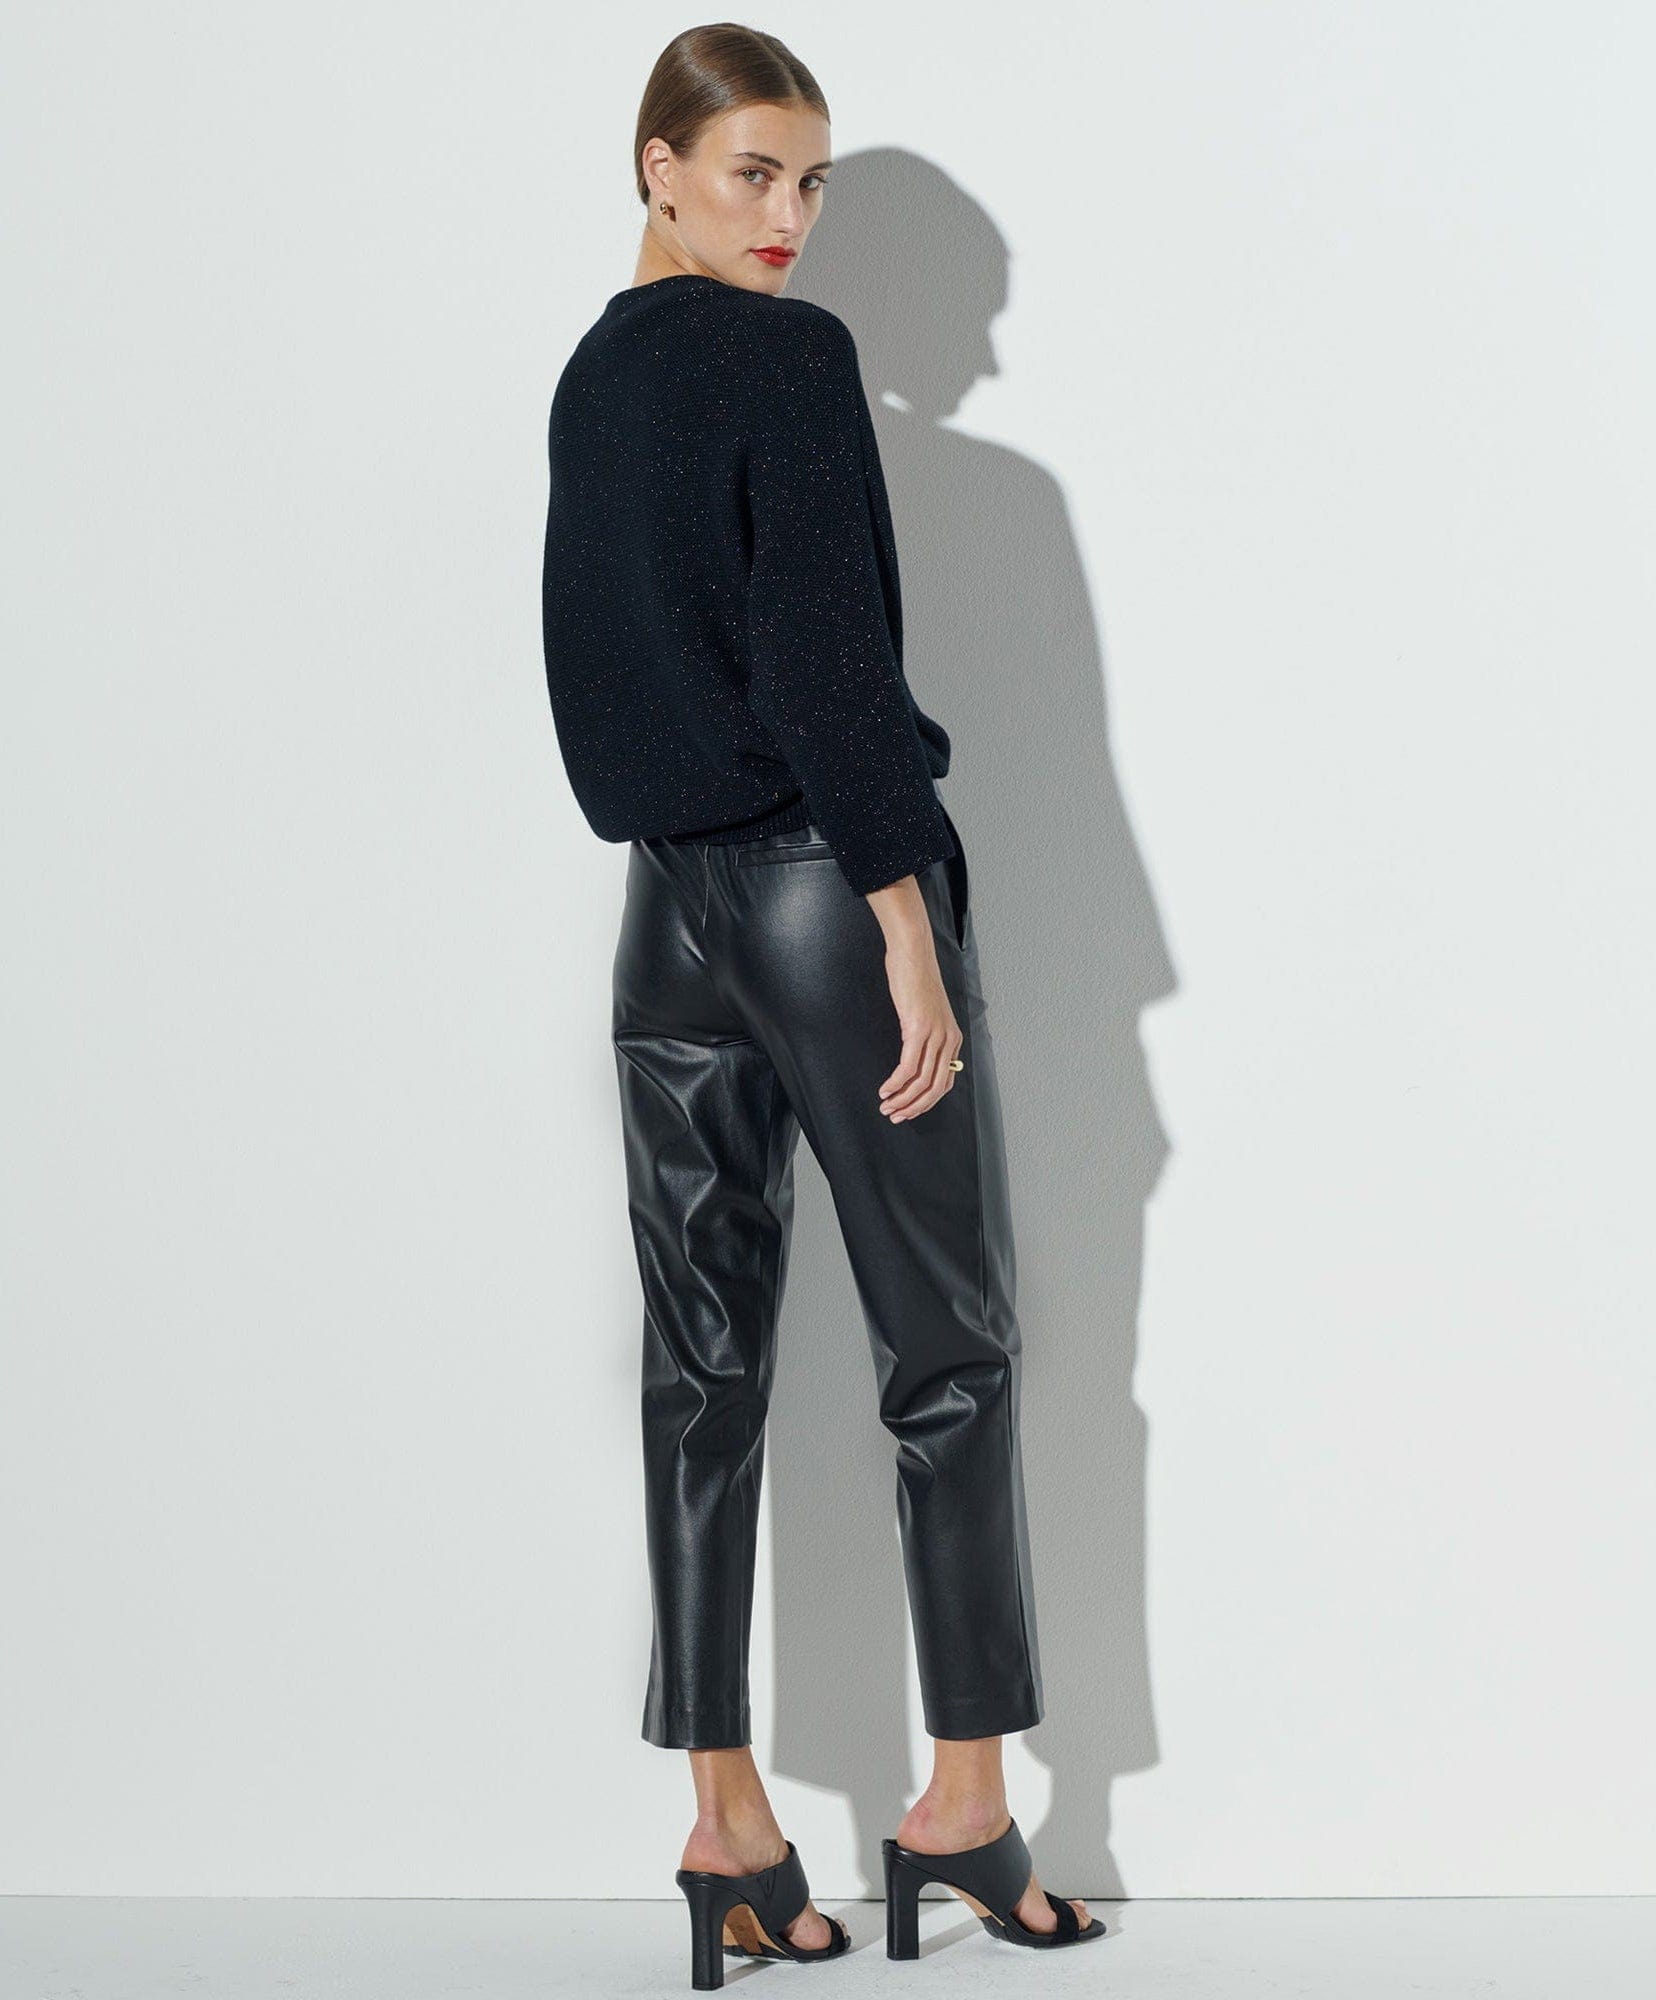 Zara Basic Black Faux Leather Skinny Pants High Rise Side & Ankle